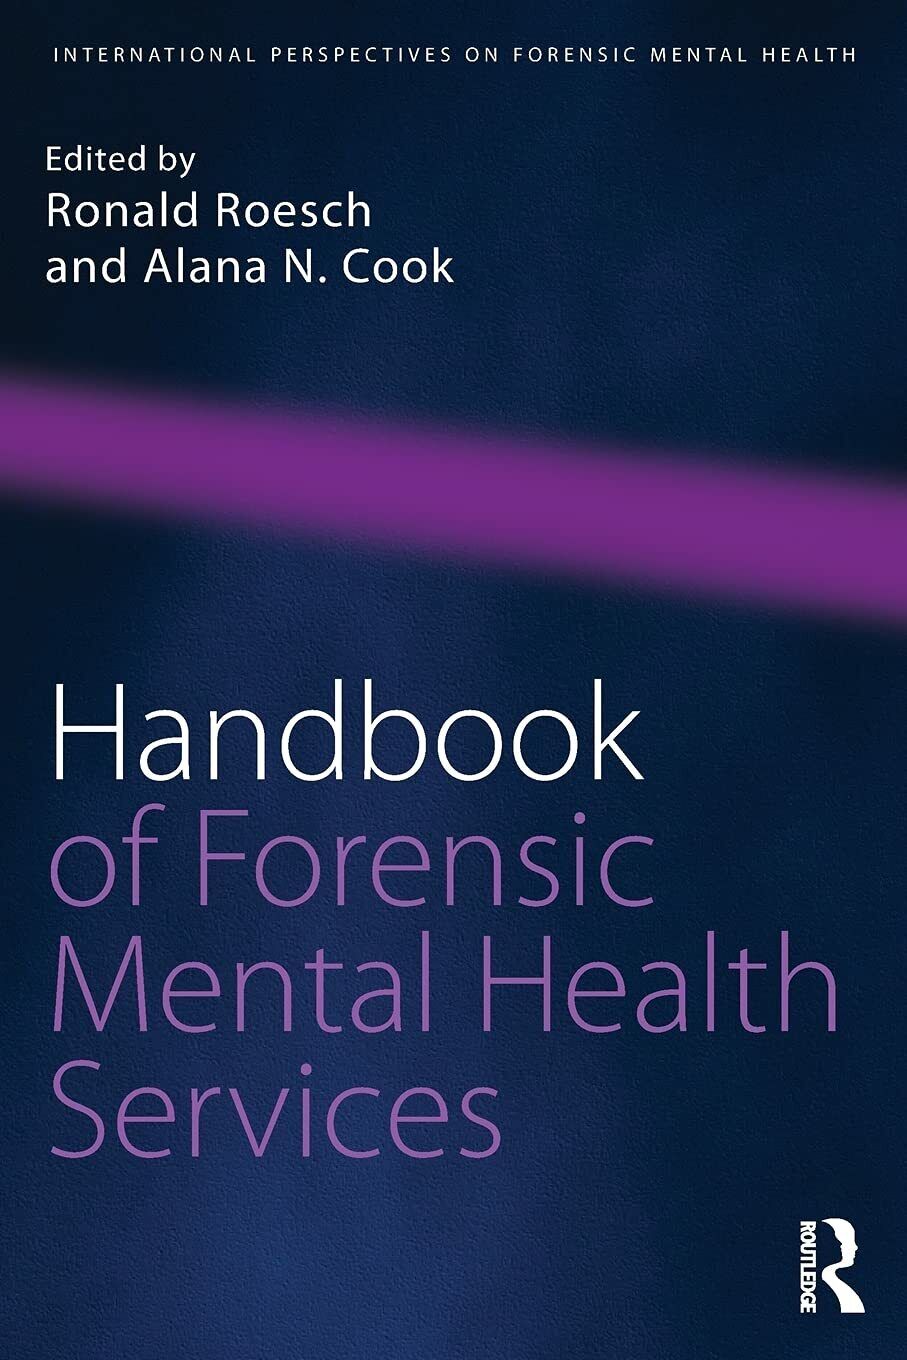 Handbook of Forensic Mental Health Services - Ronald Roesch - ROUTLEDGE, 2017 libro usato